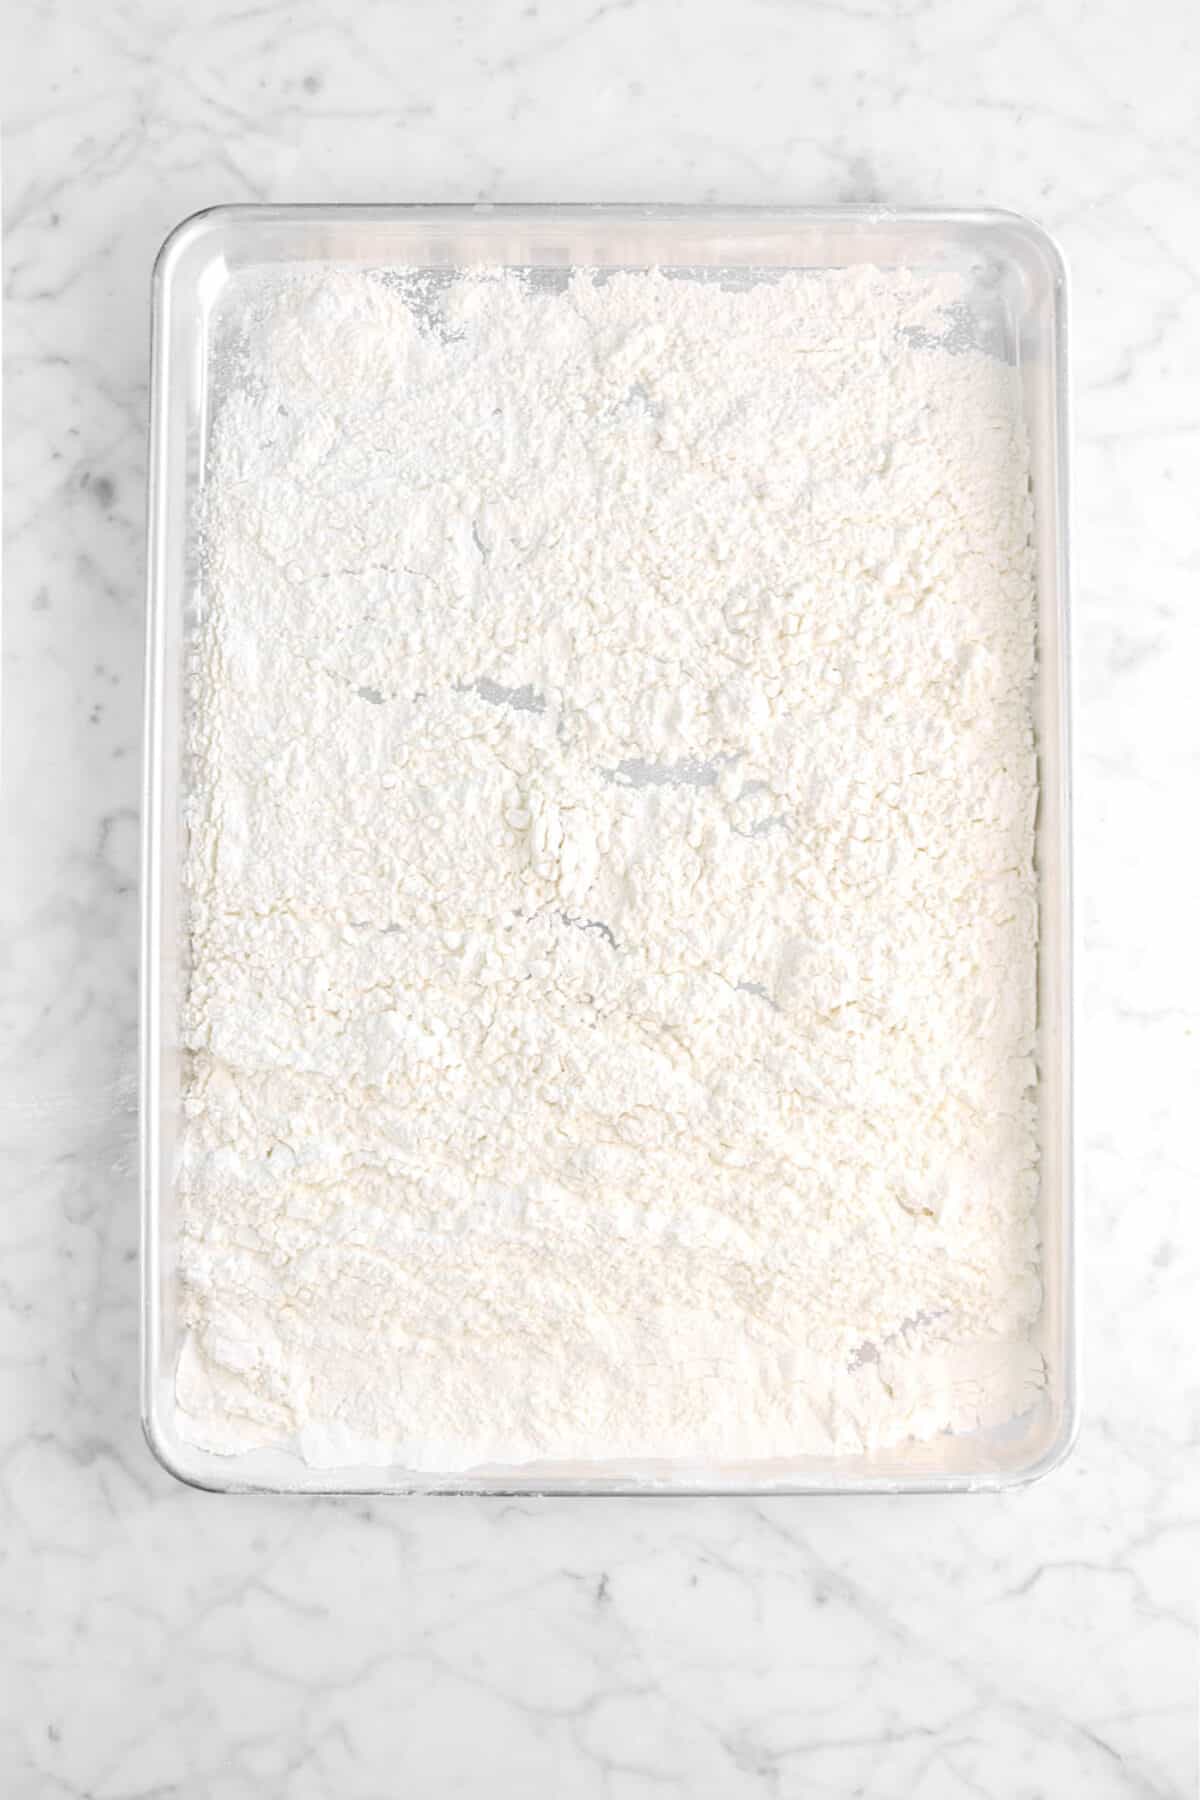 flour on baking sheet